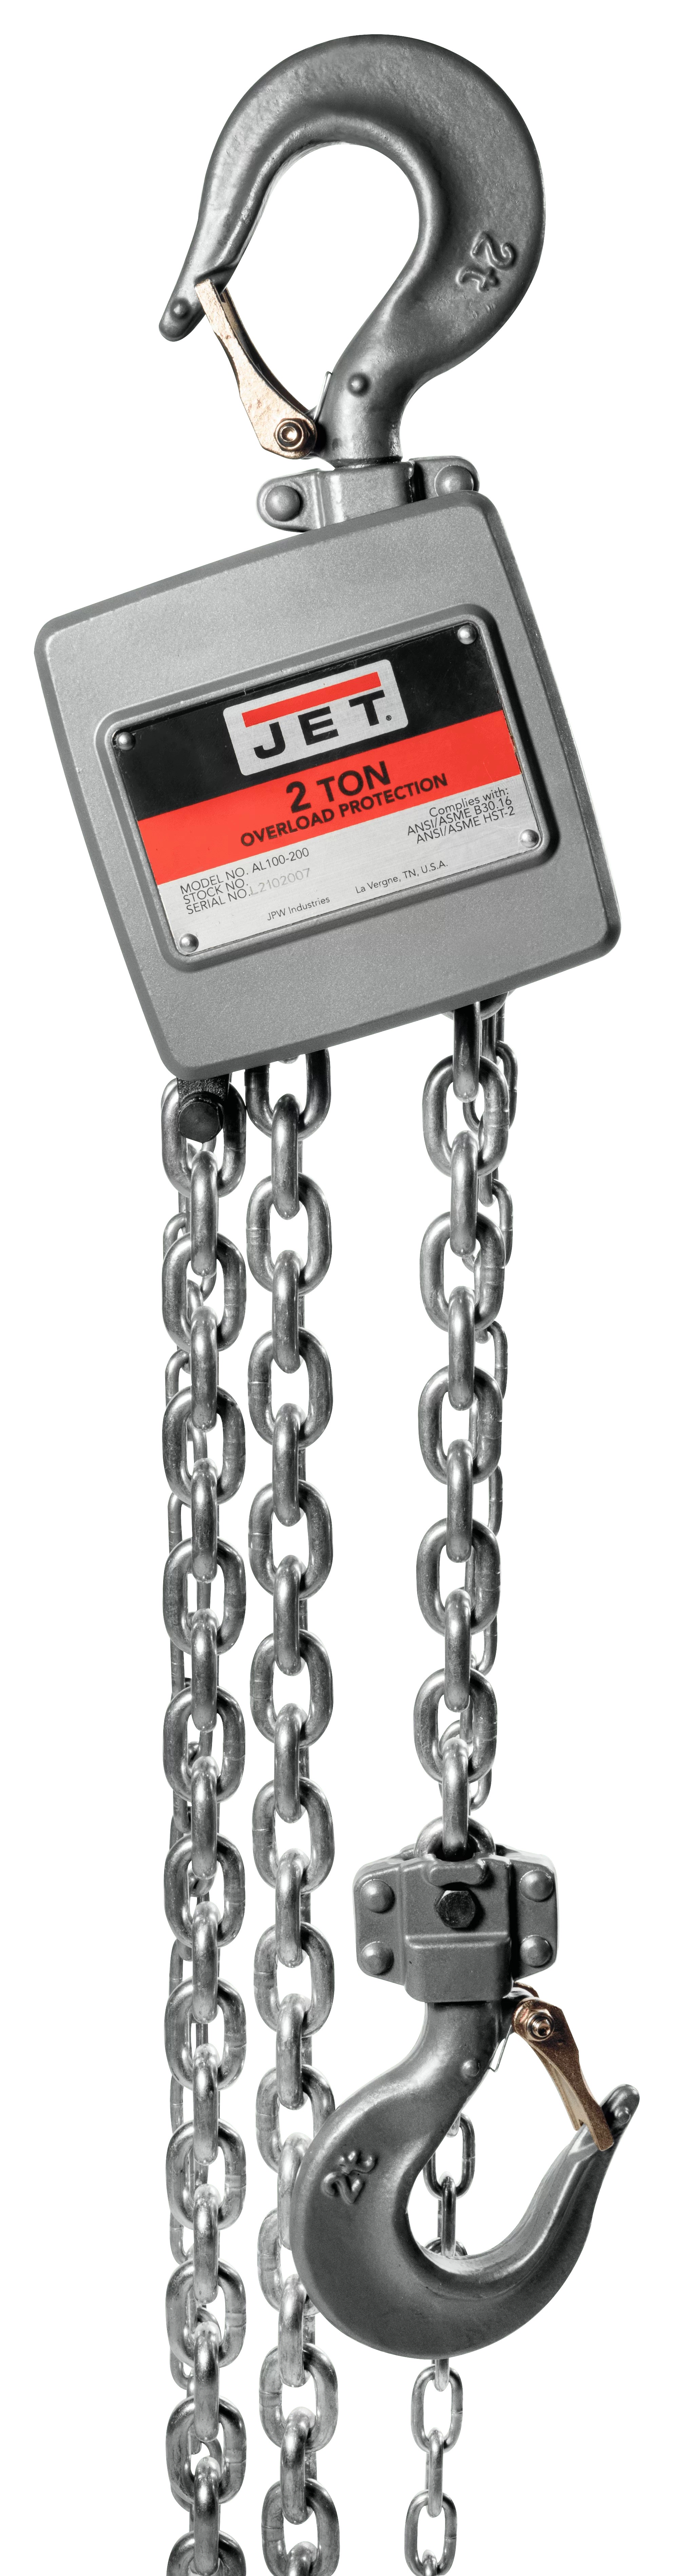 AL100-200-15 2 Ton Aluminum Hand Chain Hoist with 15ft of Lift